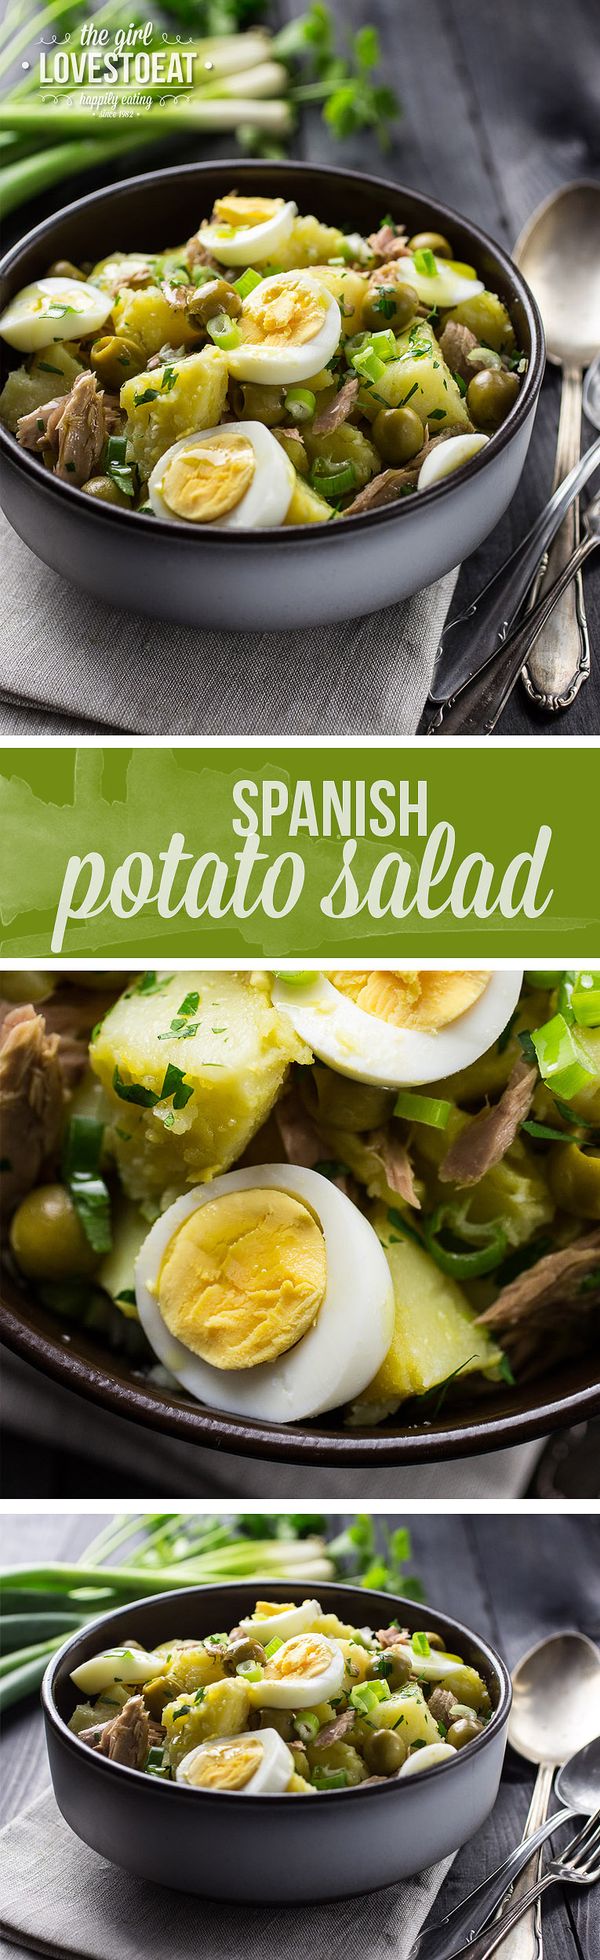 Spanish Potato salad